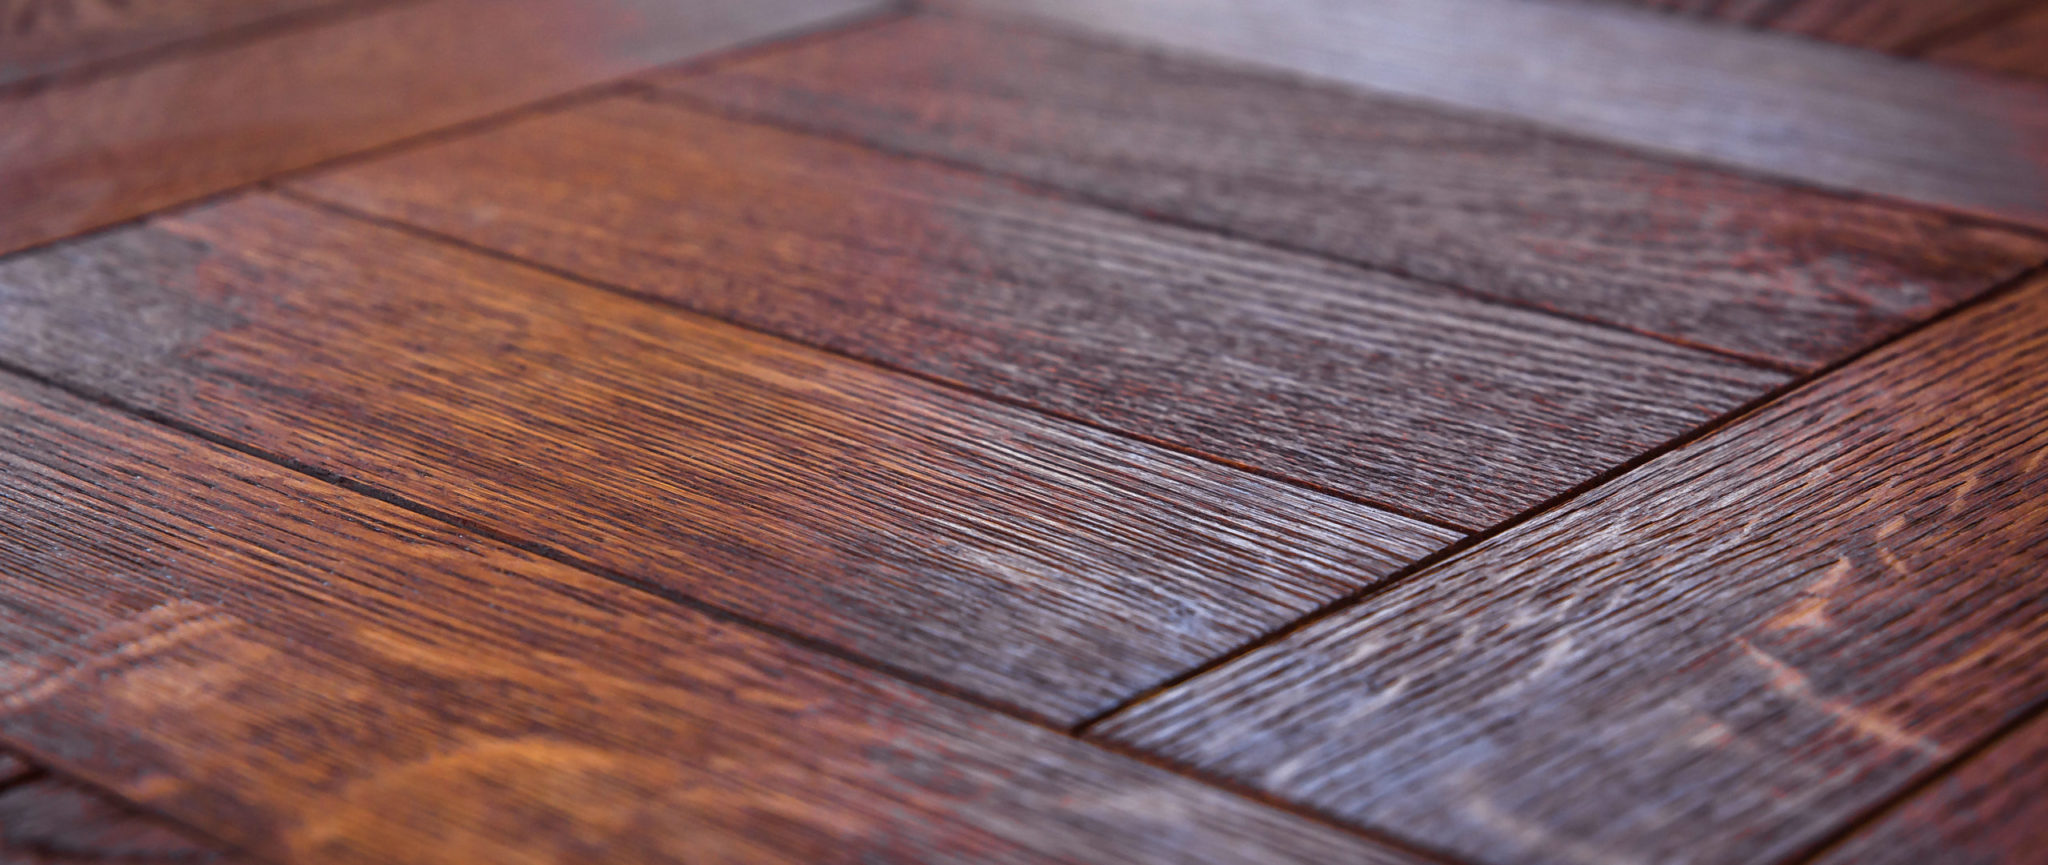 Hardwood Floor Installation Refinishing, Perfect Hardwood Floors